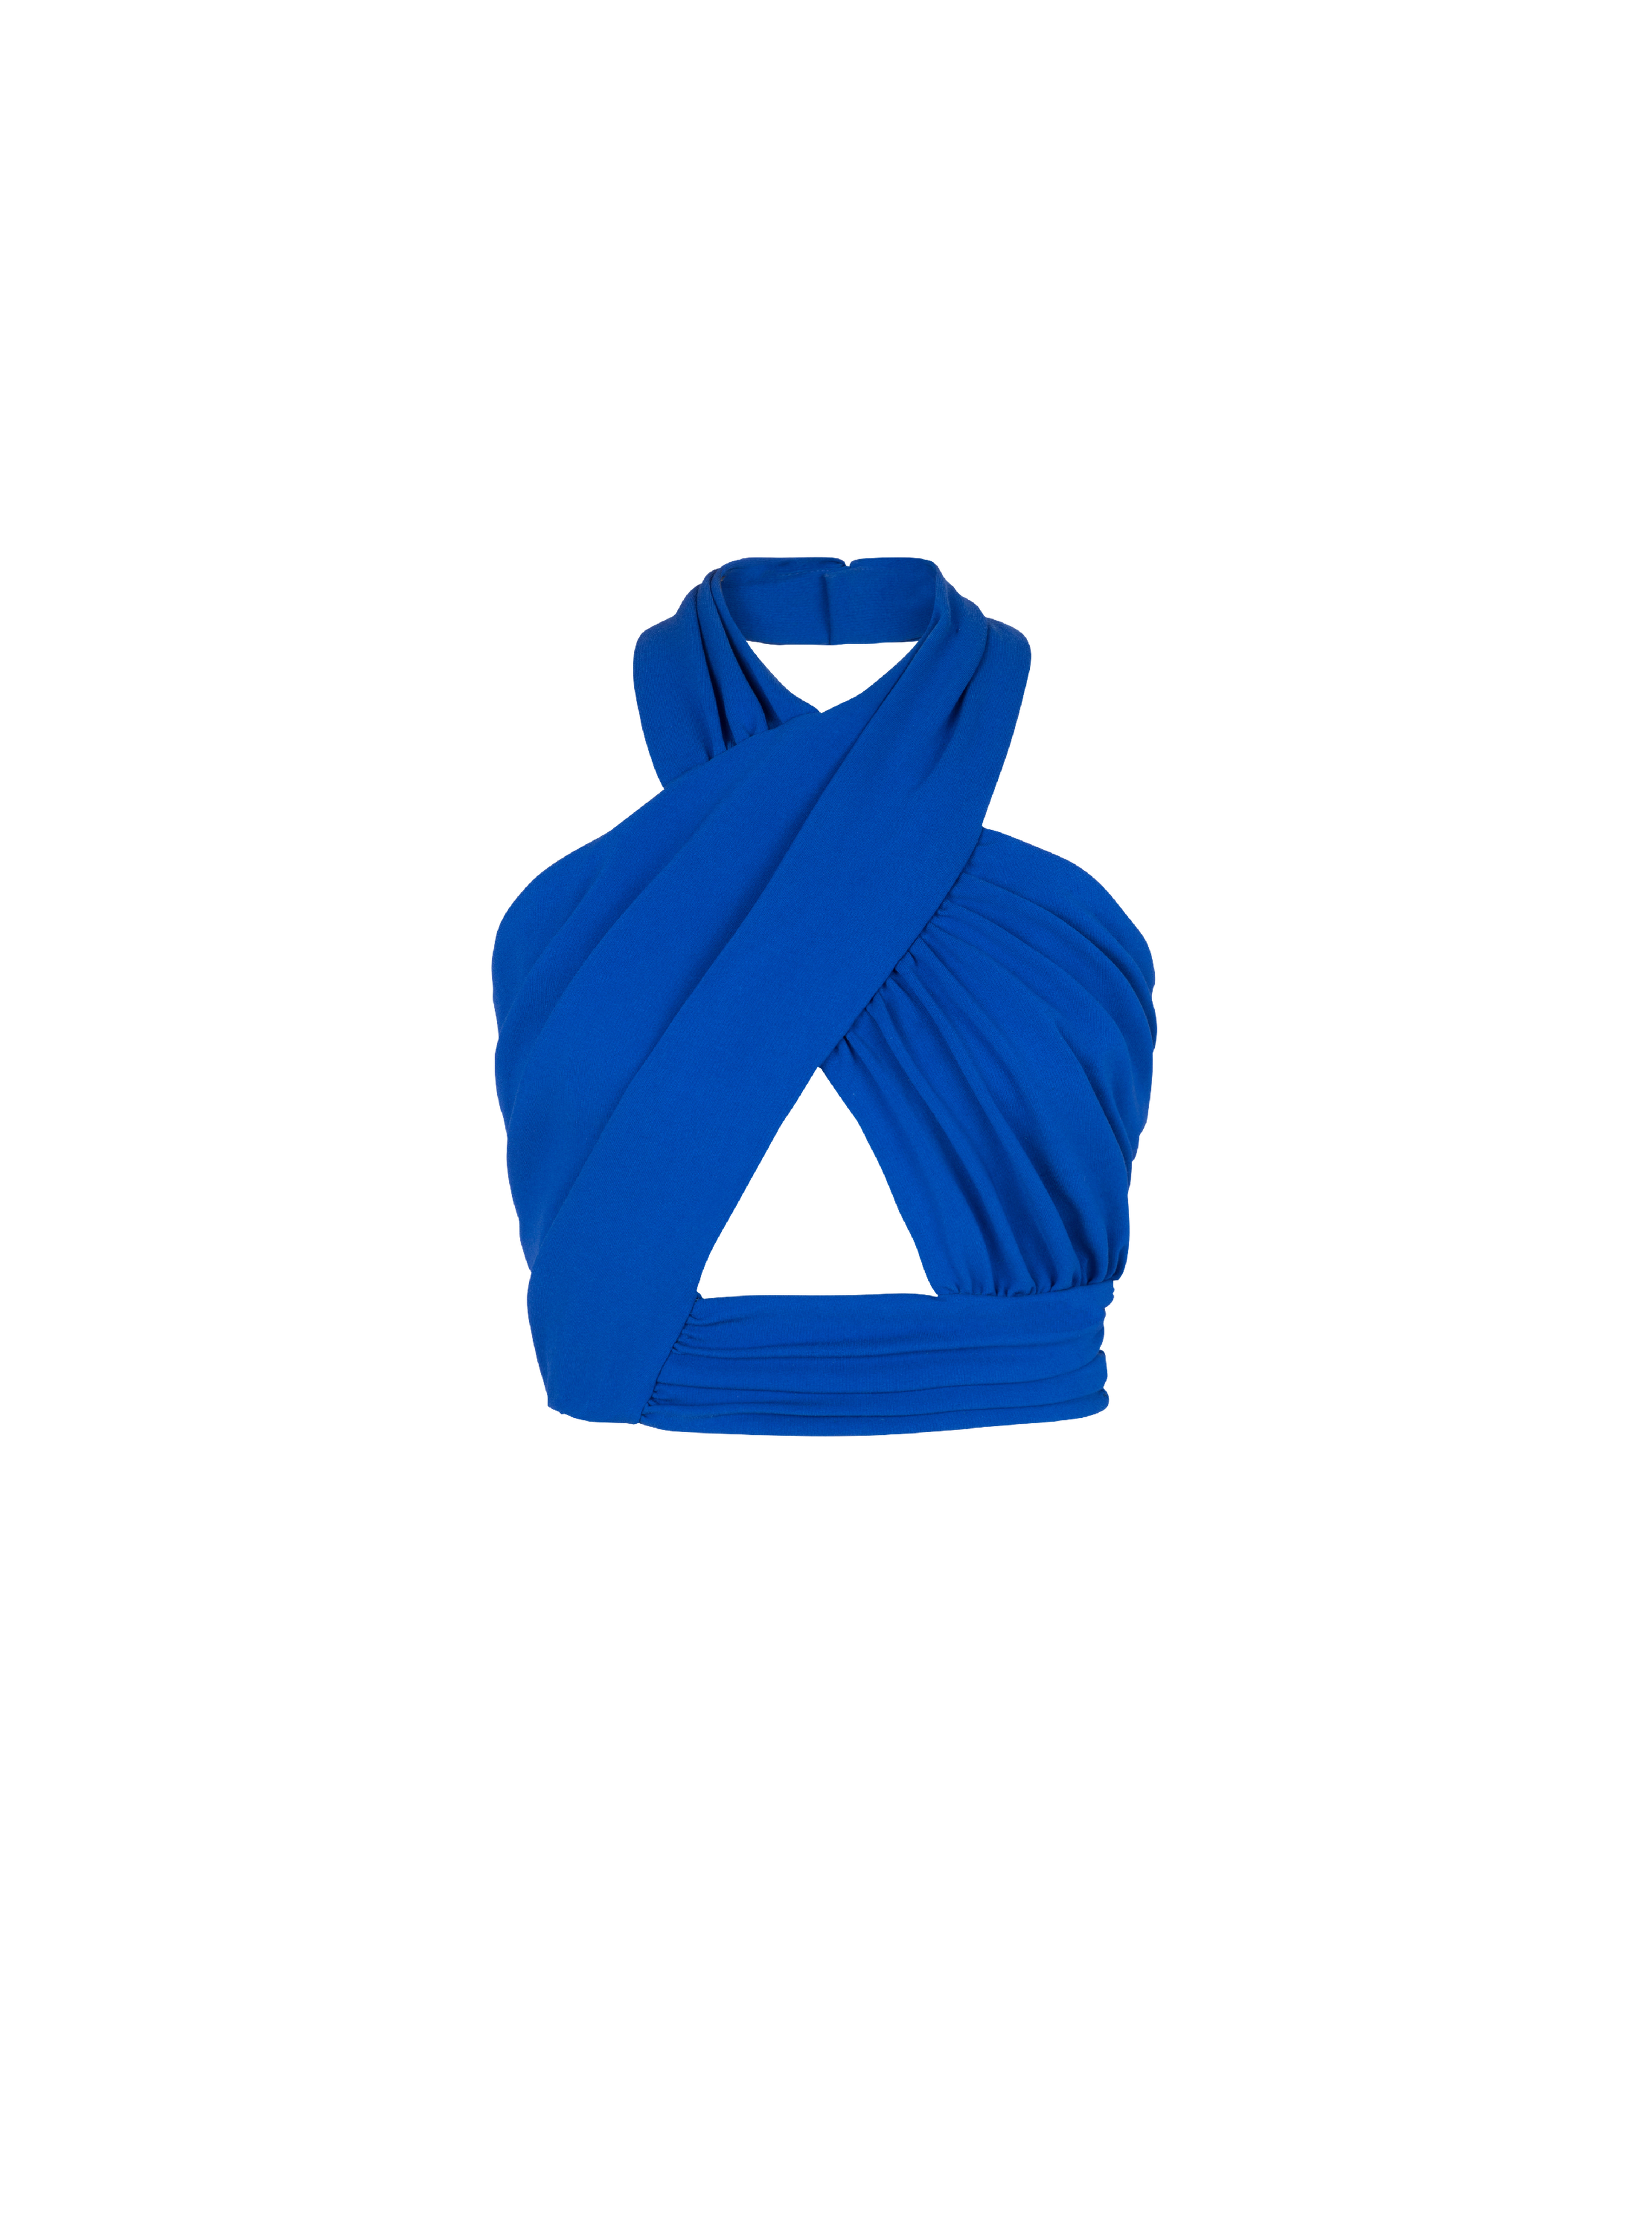 Draped jersey crop top, blue